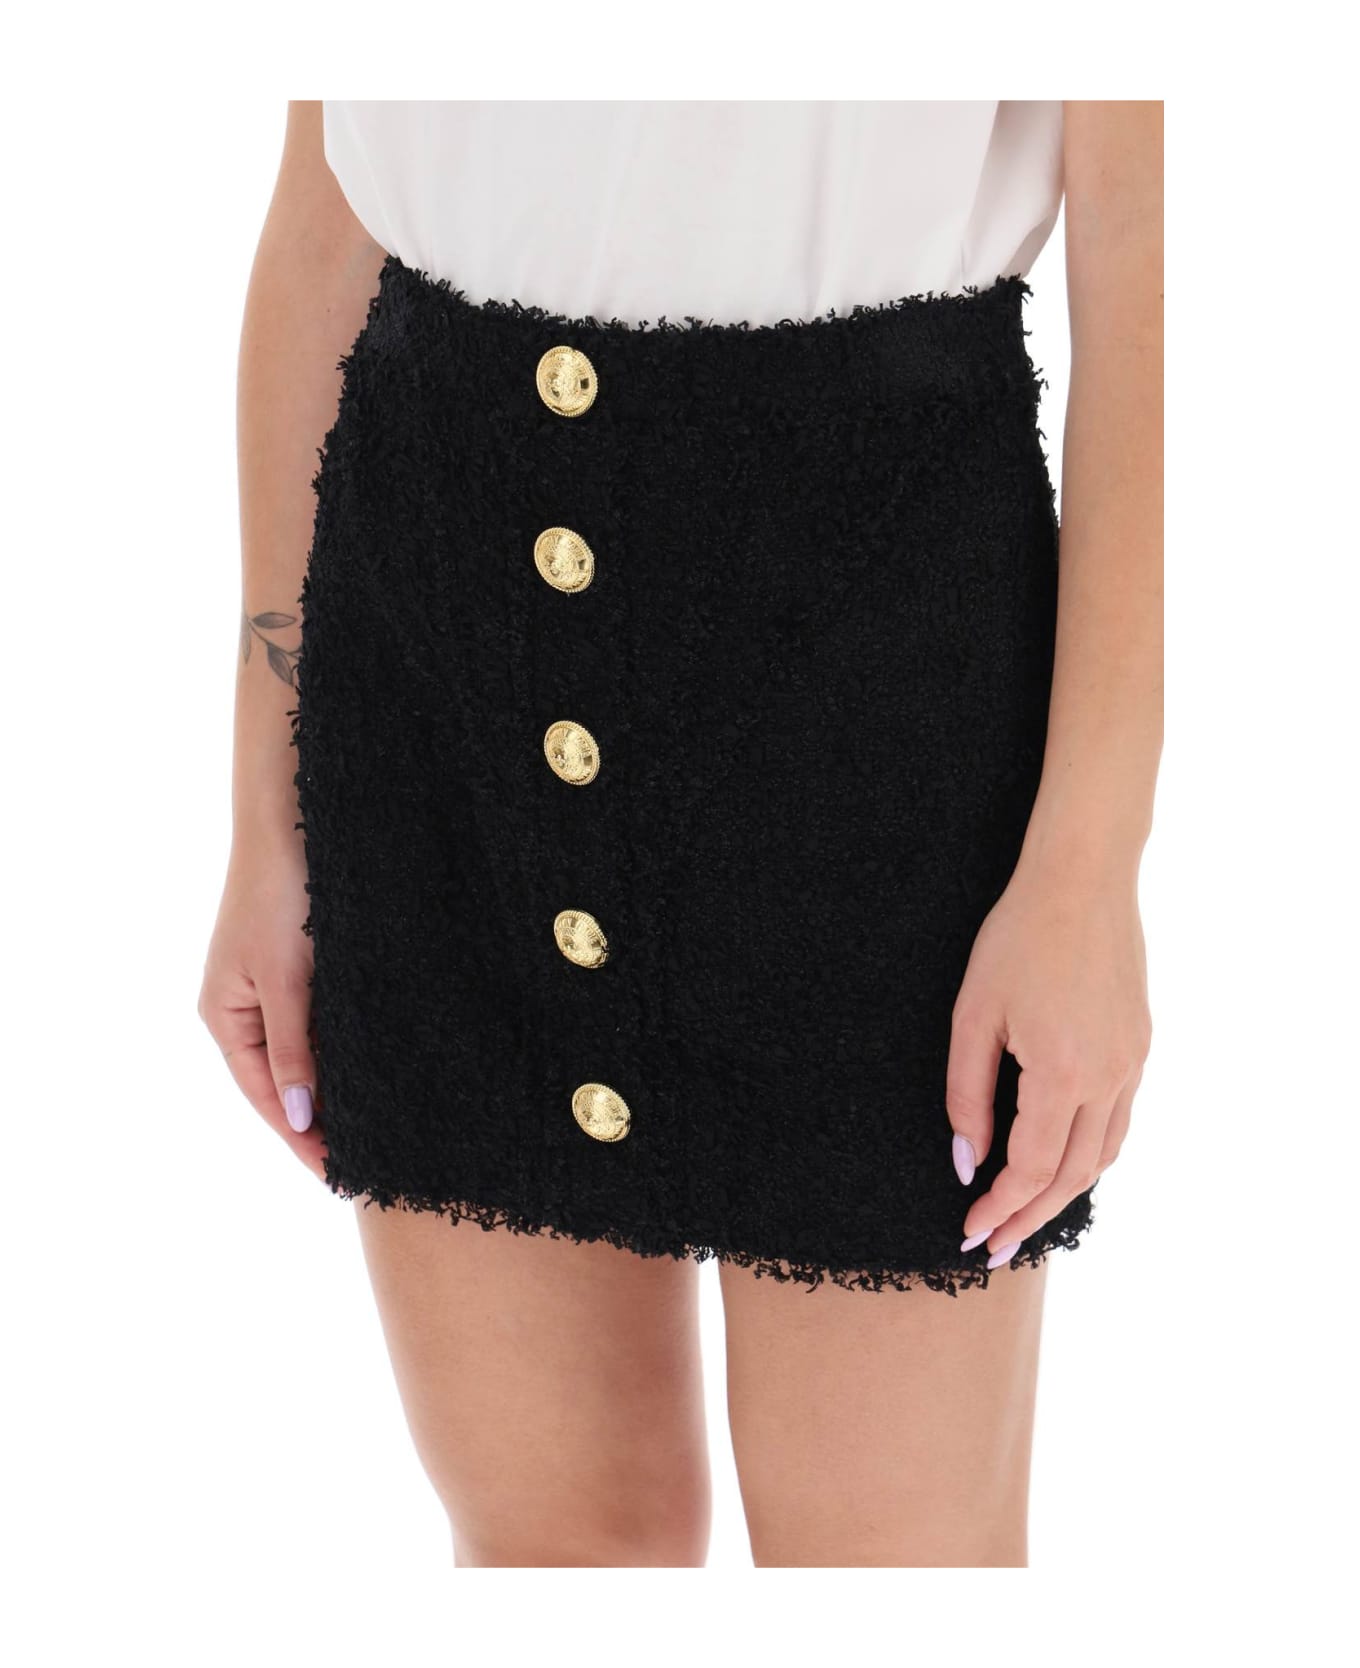 Balmain Tweed Skirt With Gold Buttons - Nero スカート